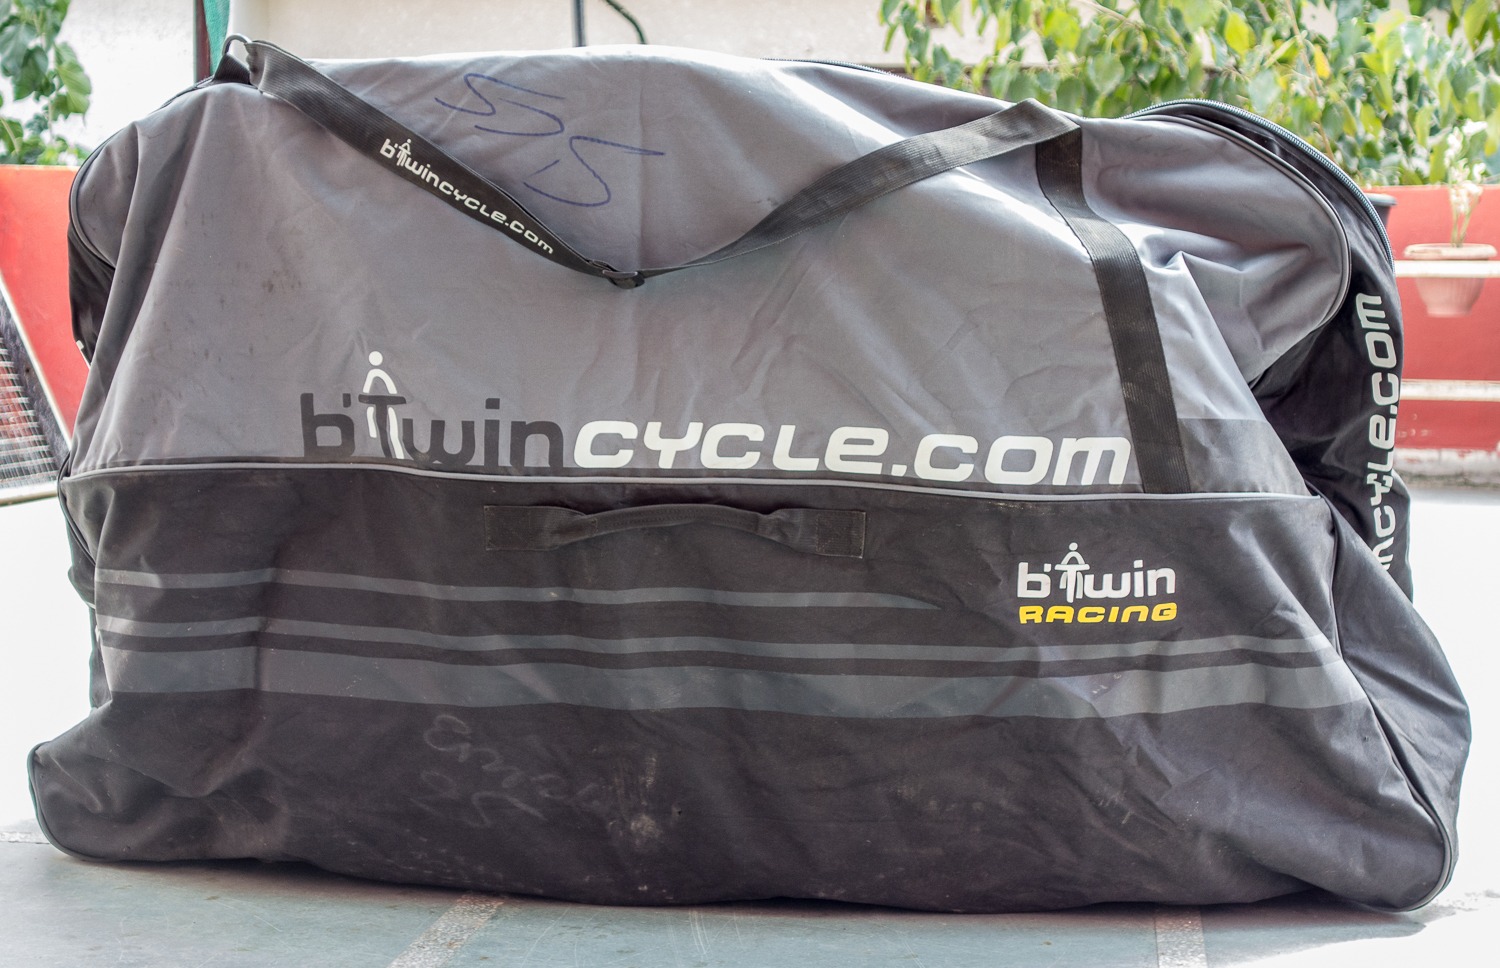 BTwin Bike Transport Bag Review in 